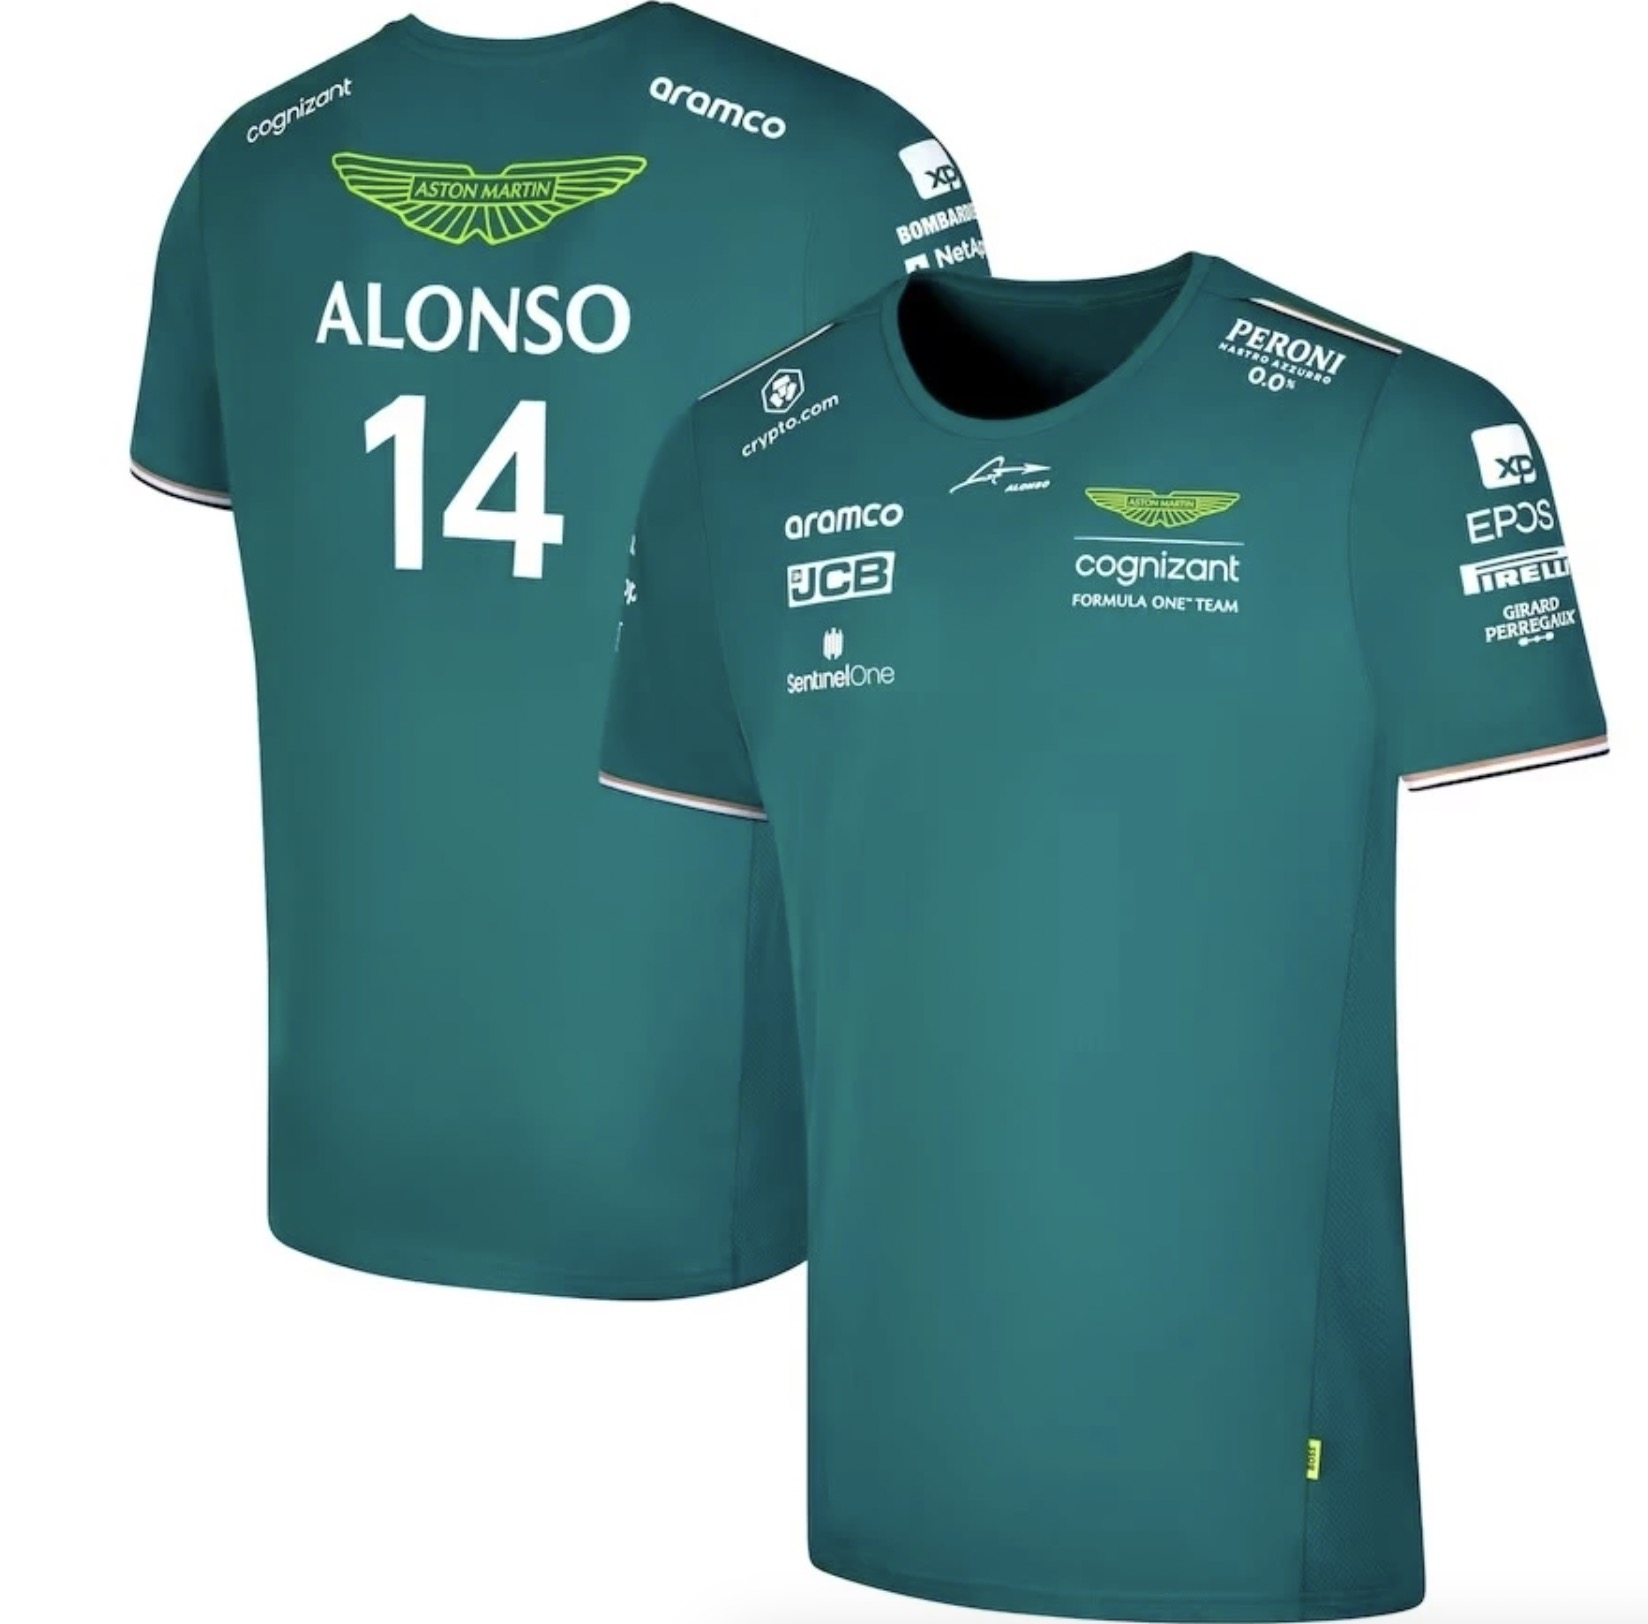 Camiseta manga corta Alonso Aston Martin F1